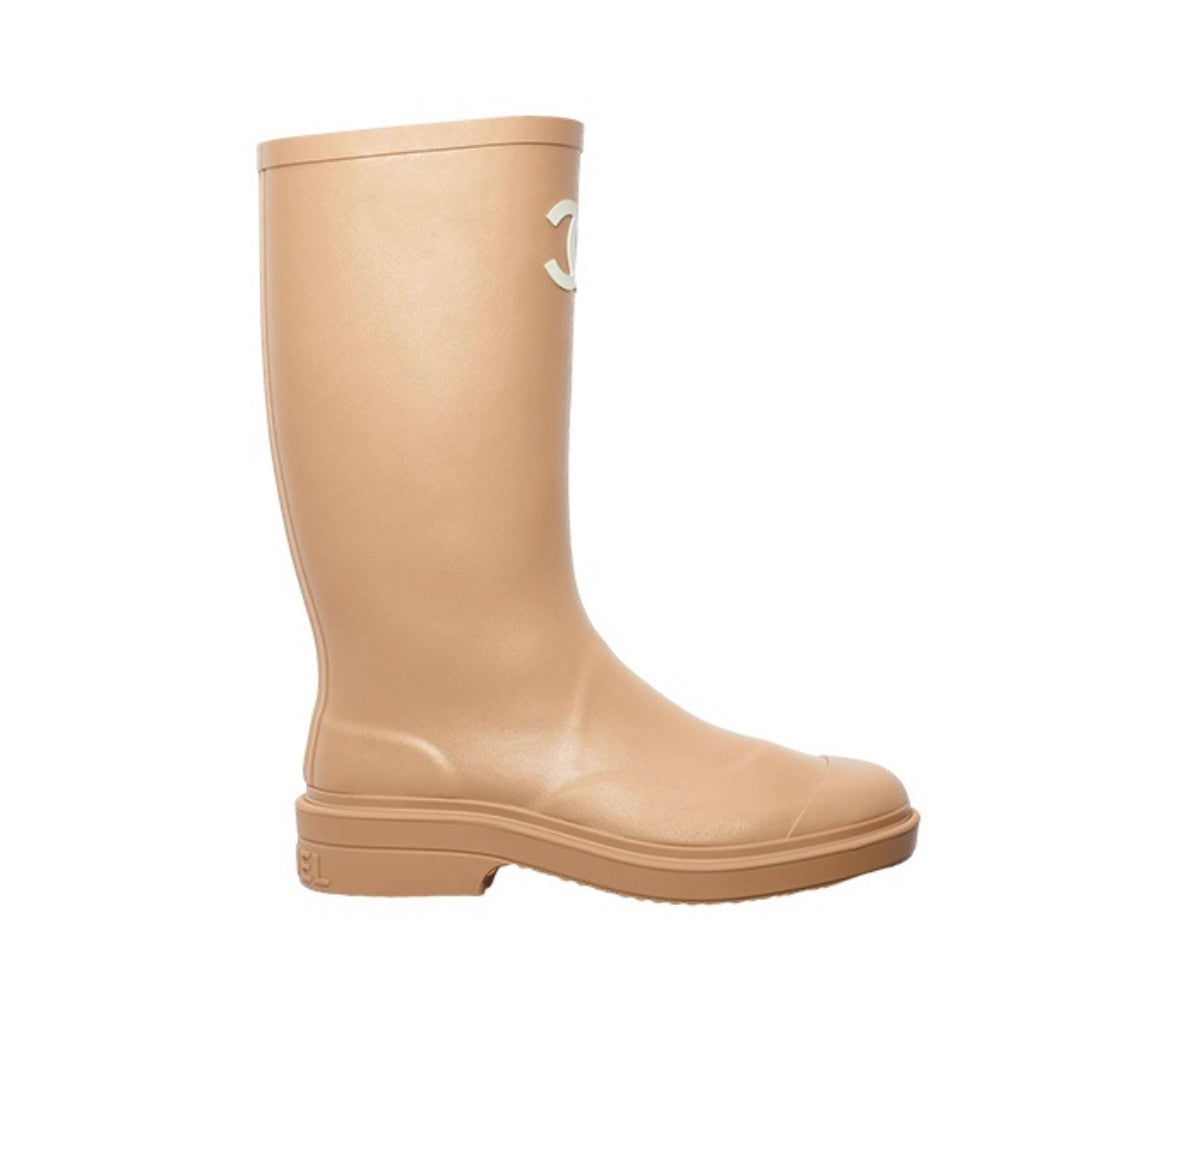 Chanel Rubber Rain Boots “Beige”